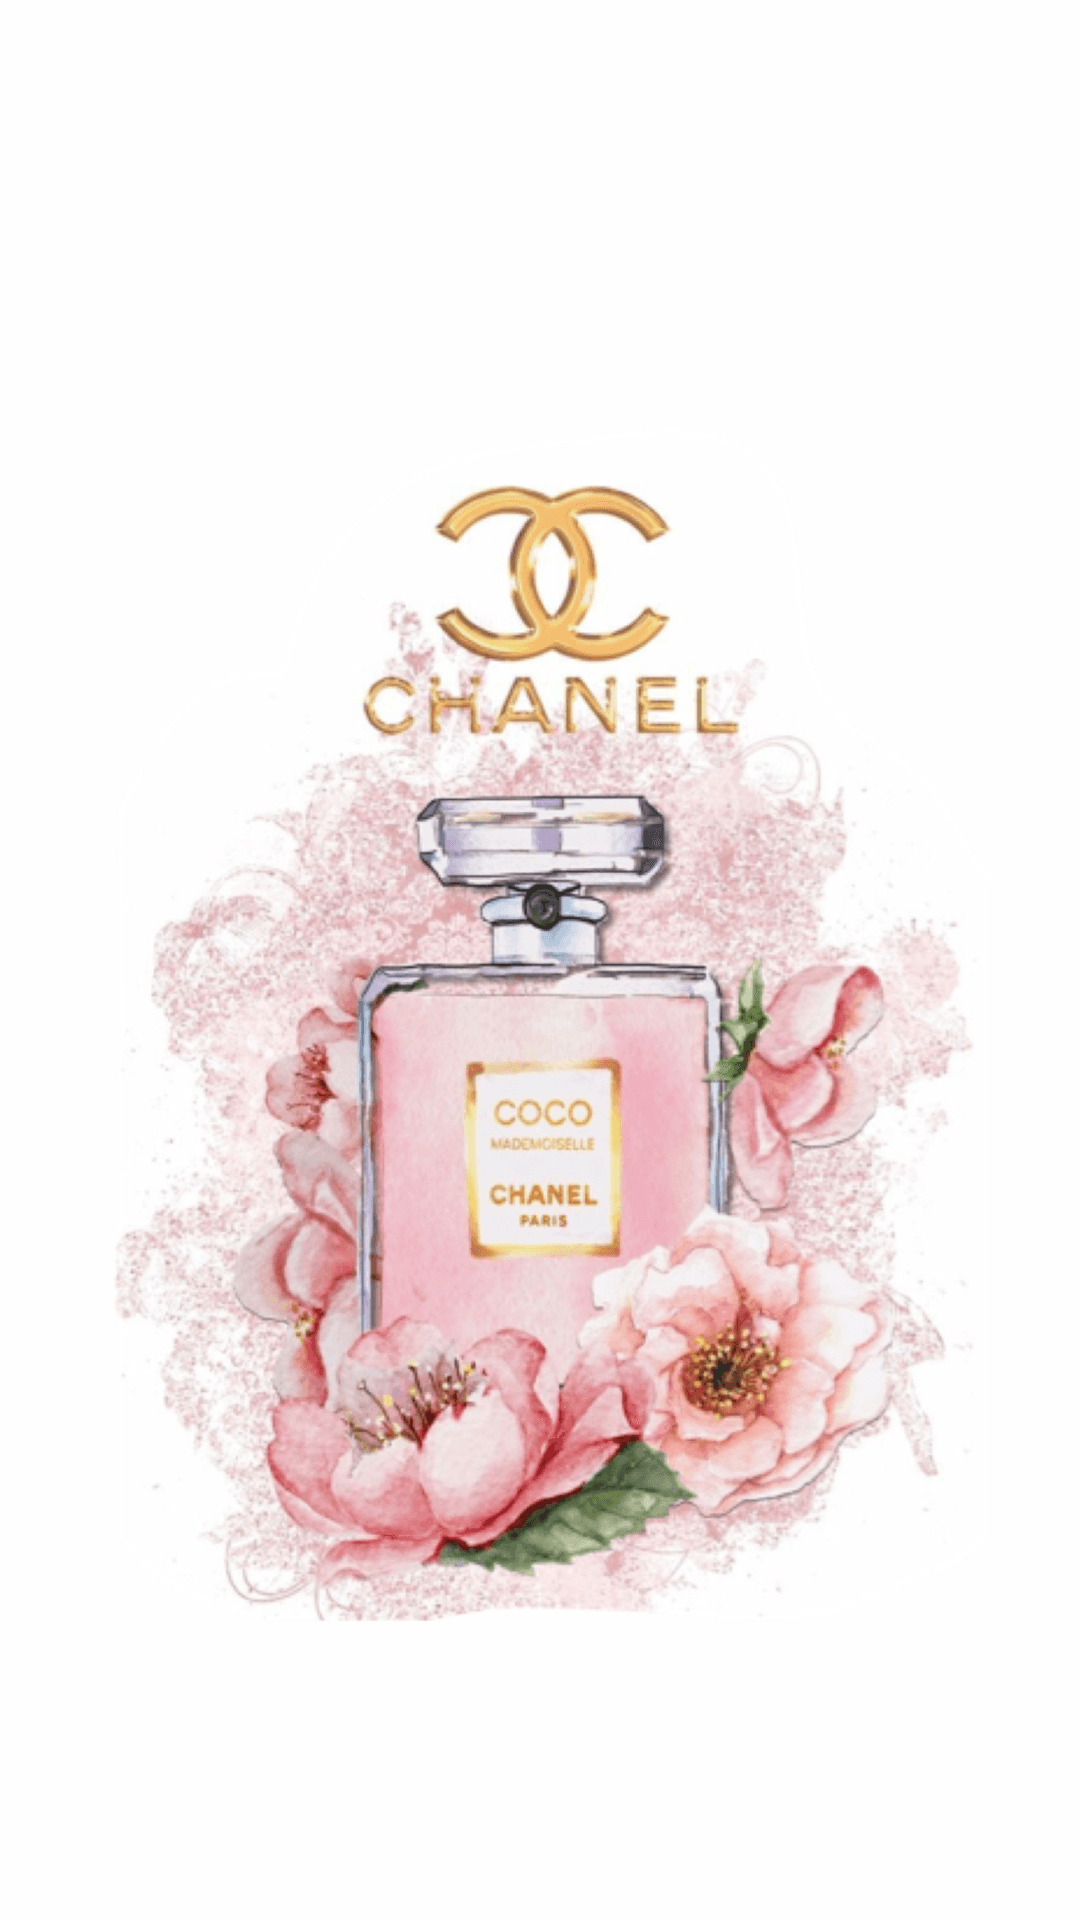 Unlock a world of intensely refreshing fragrances. Wallpaper